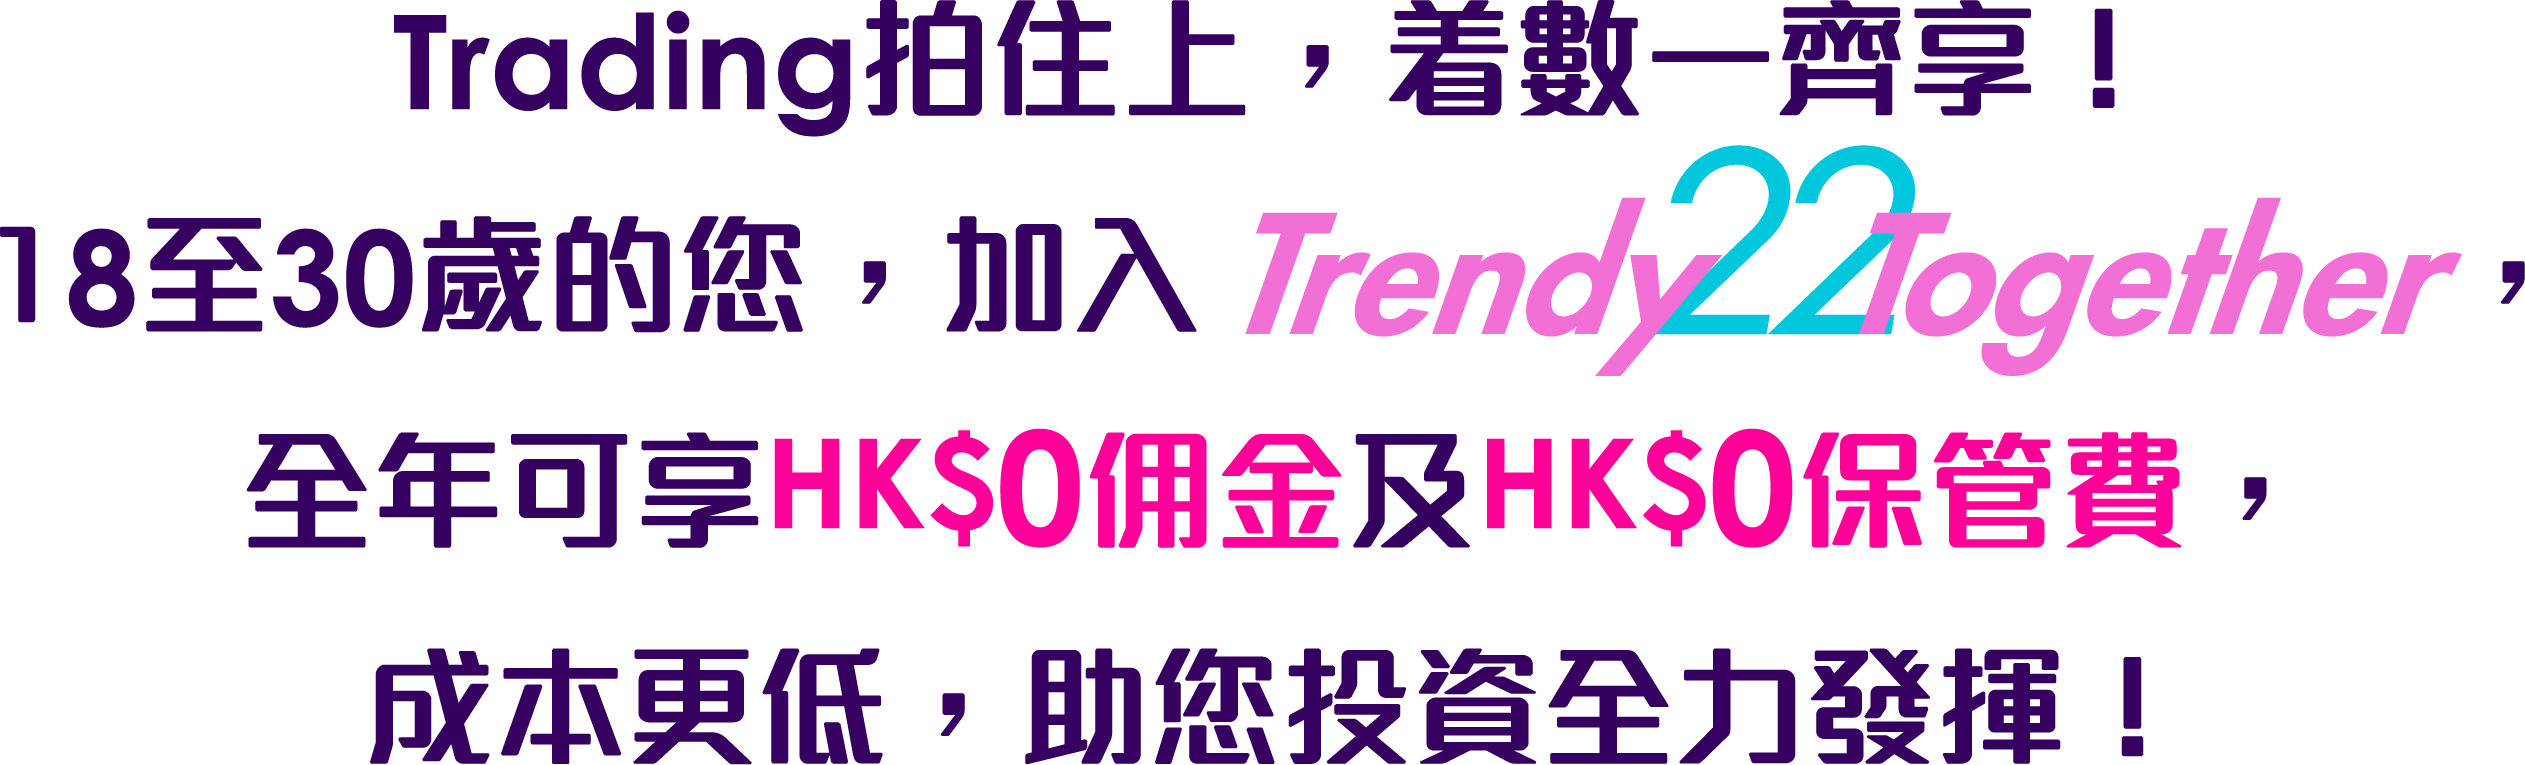 Trading拍住上，着數一齊享！18⾄30歲的您，加入TrendyTogether，全年可享HK$0佣金及HK$0保管費，成本更低，助您投資全力發揮！